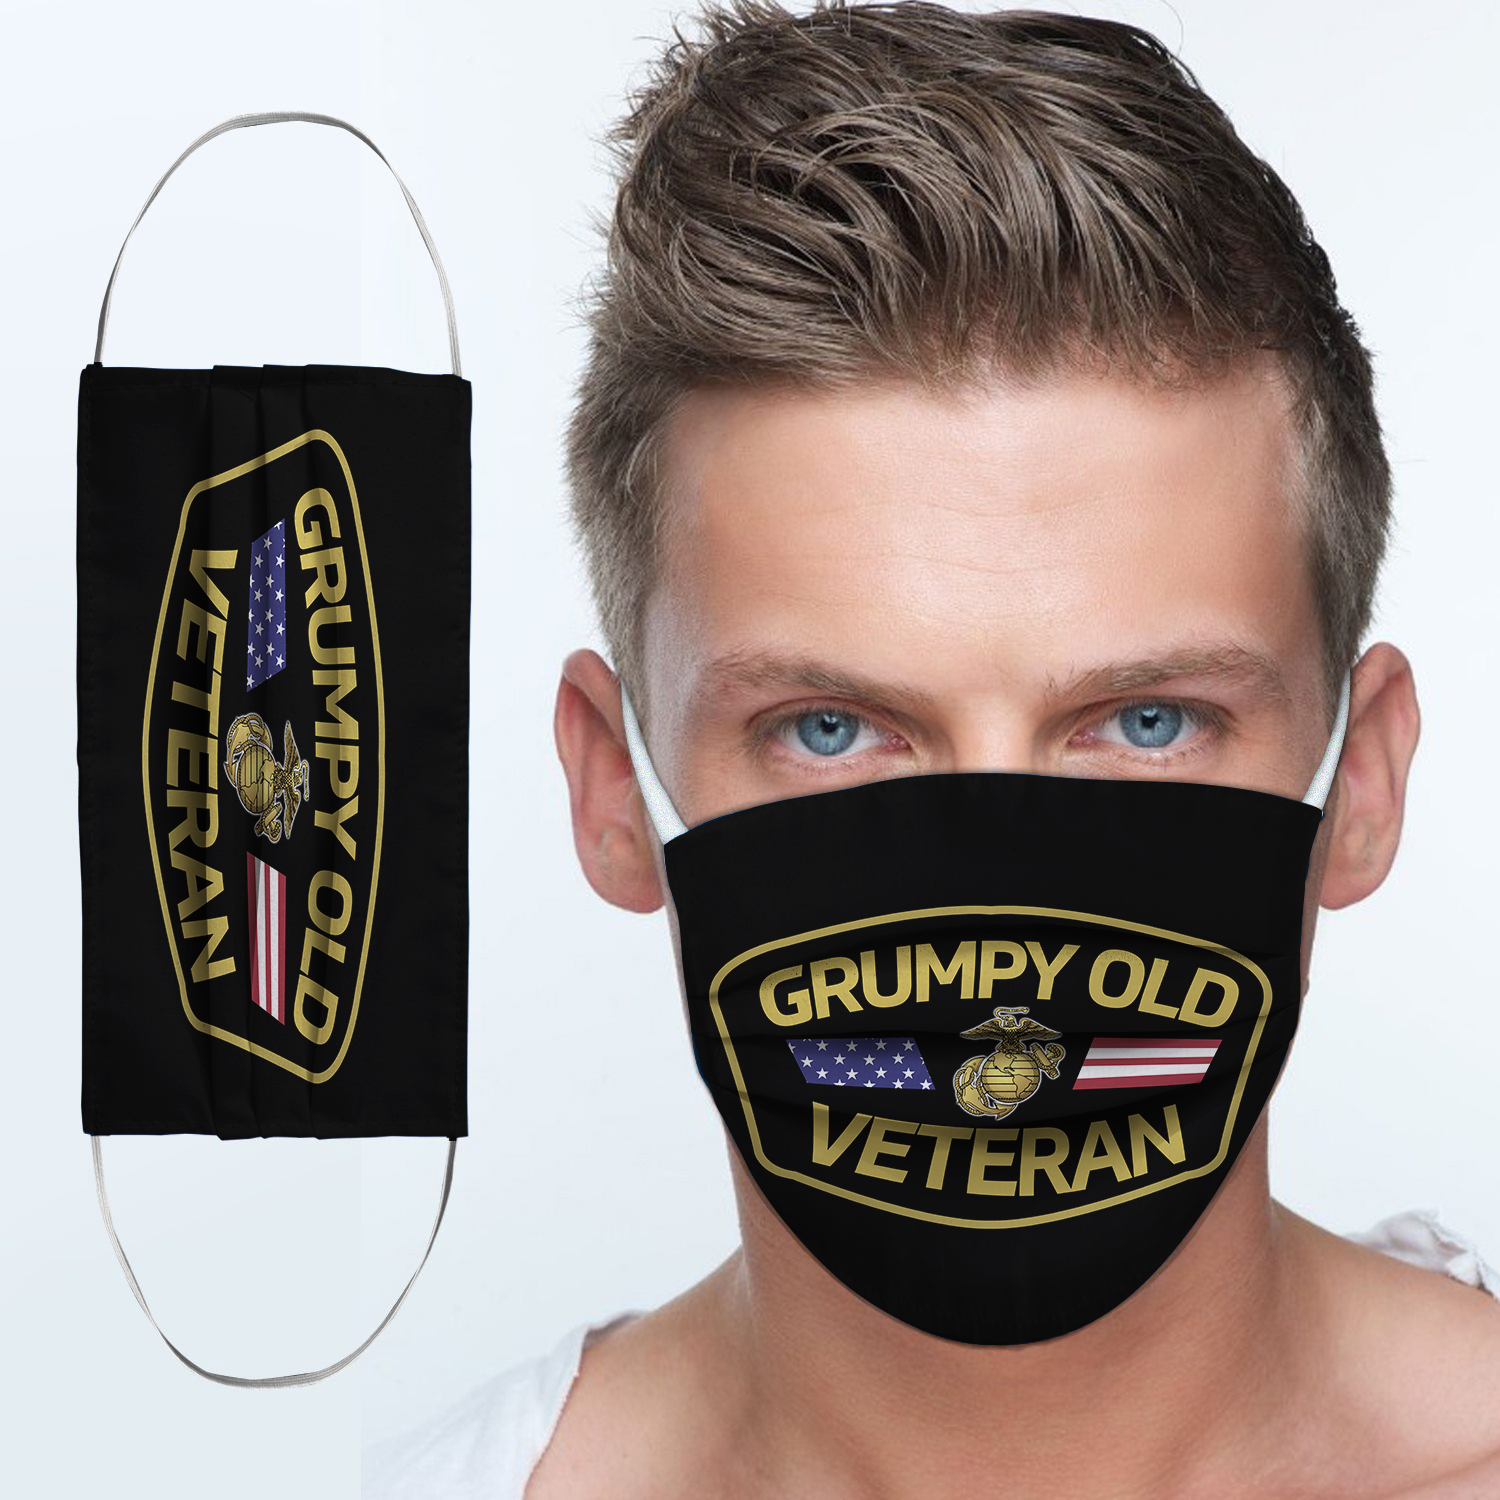 Grumpy old us marine corps veteran anti-dust cotton face mask 1